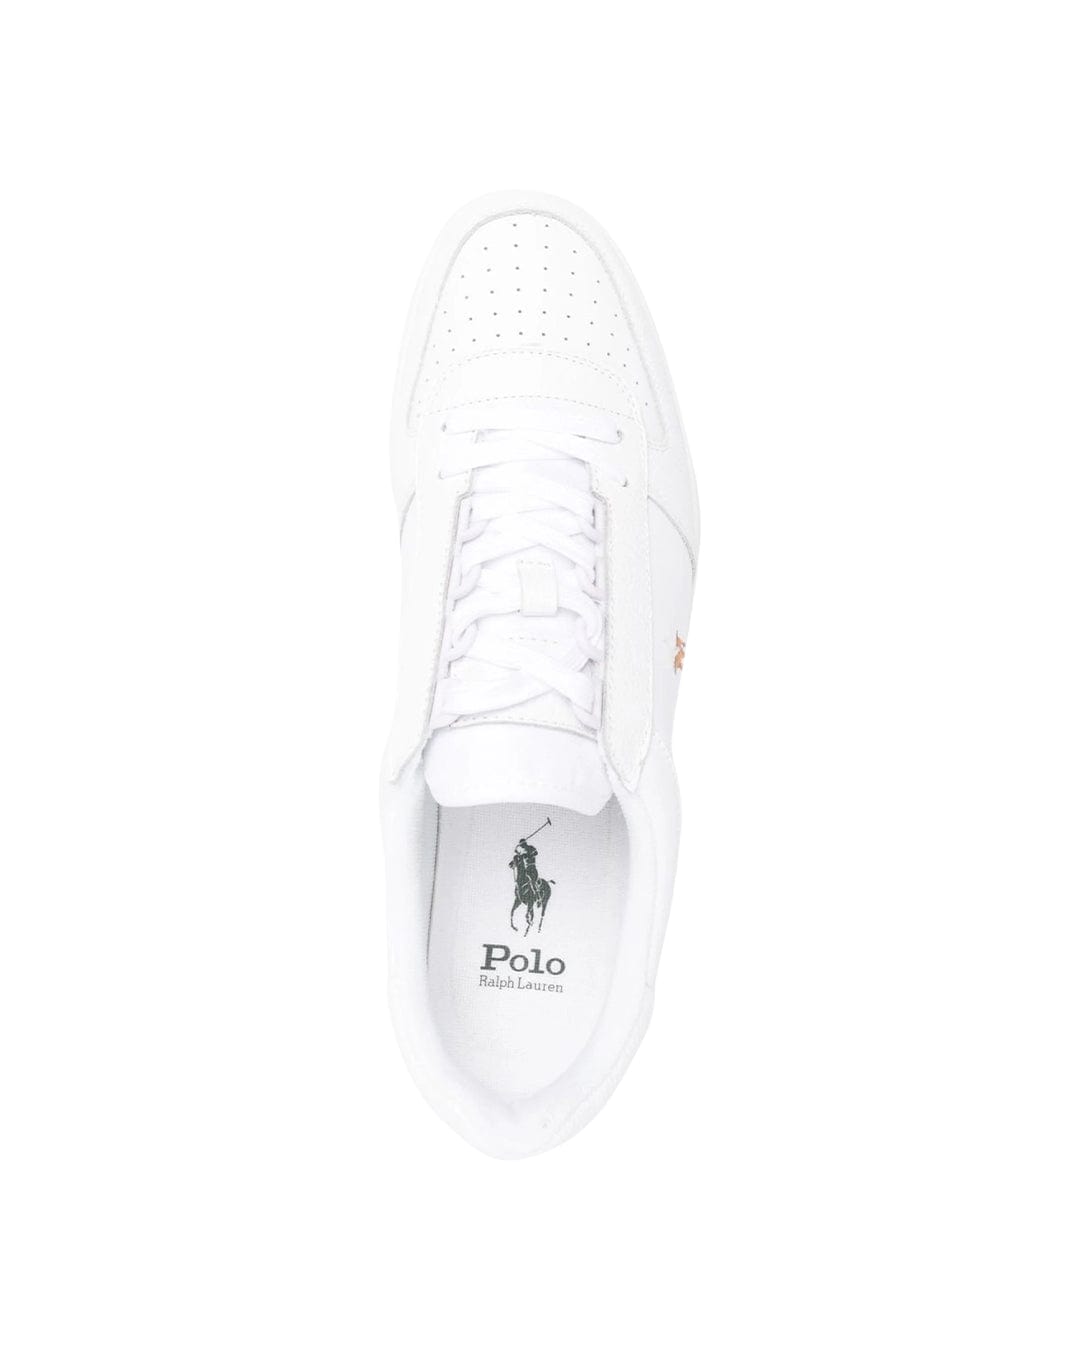 Polo Ralph Lauren Shoes Polo Ralph Lauren White Court Low Top Lace Sneakers